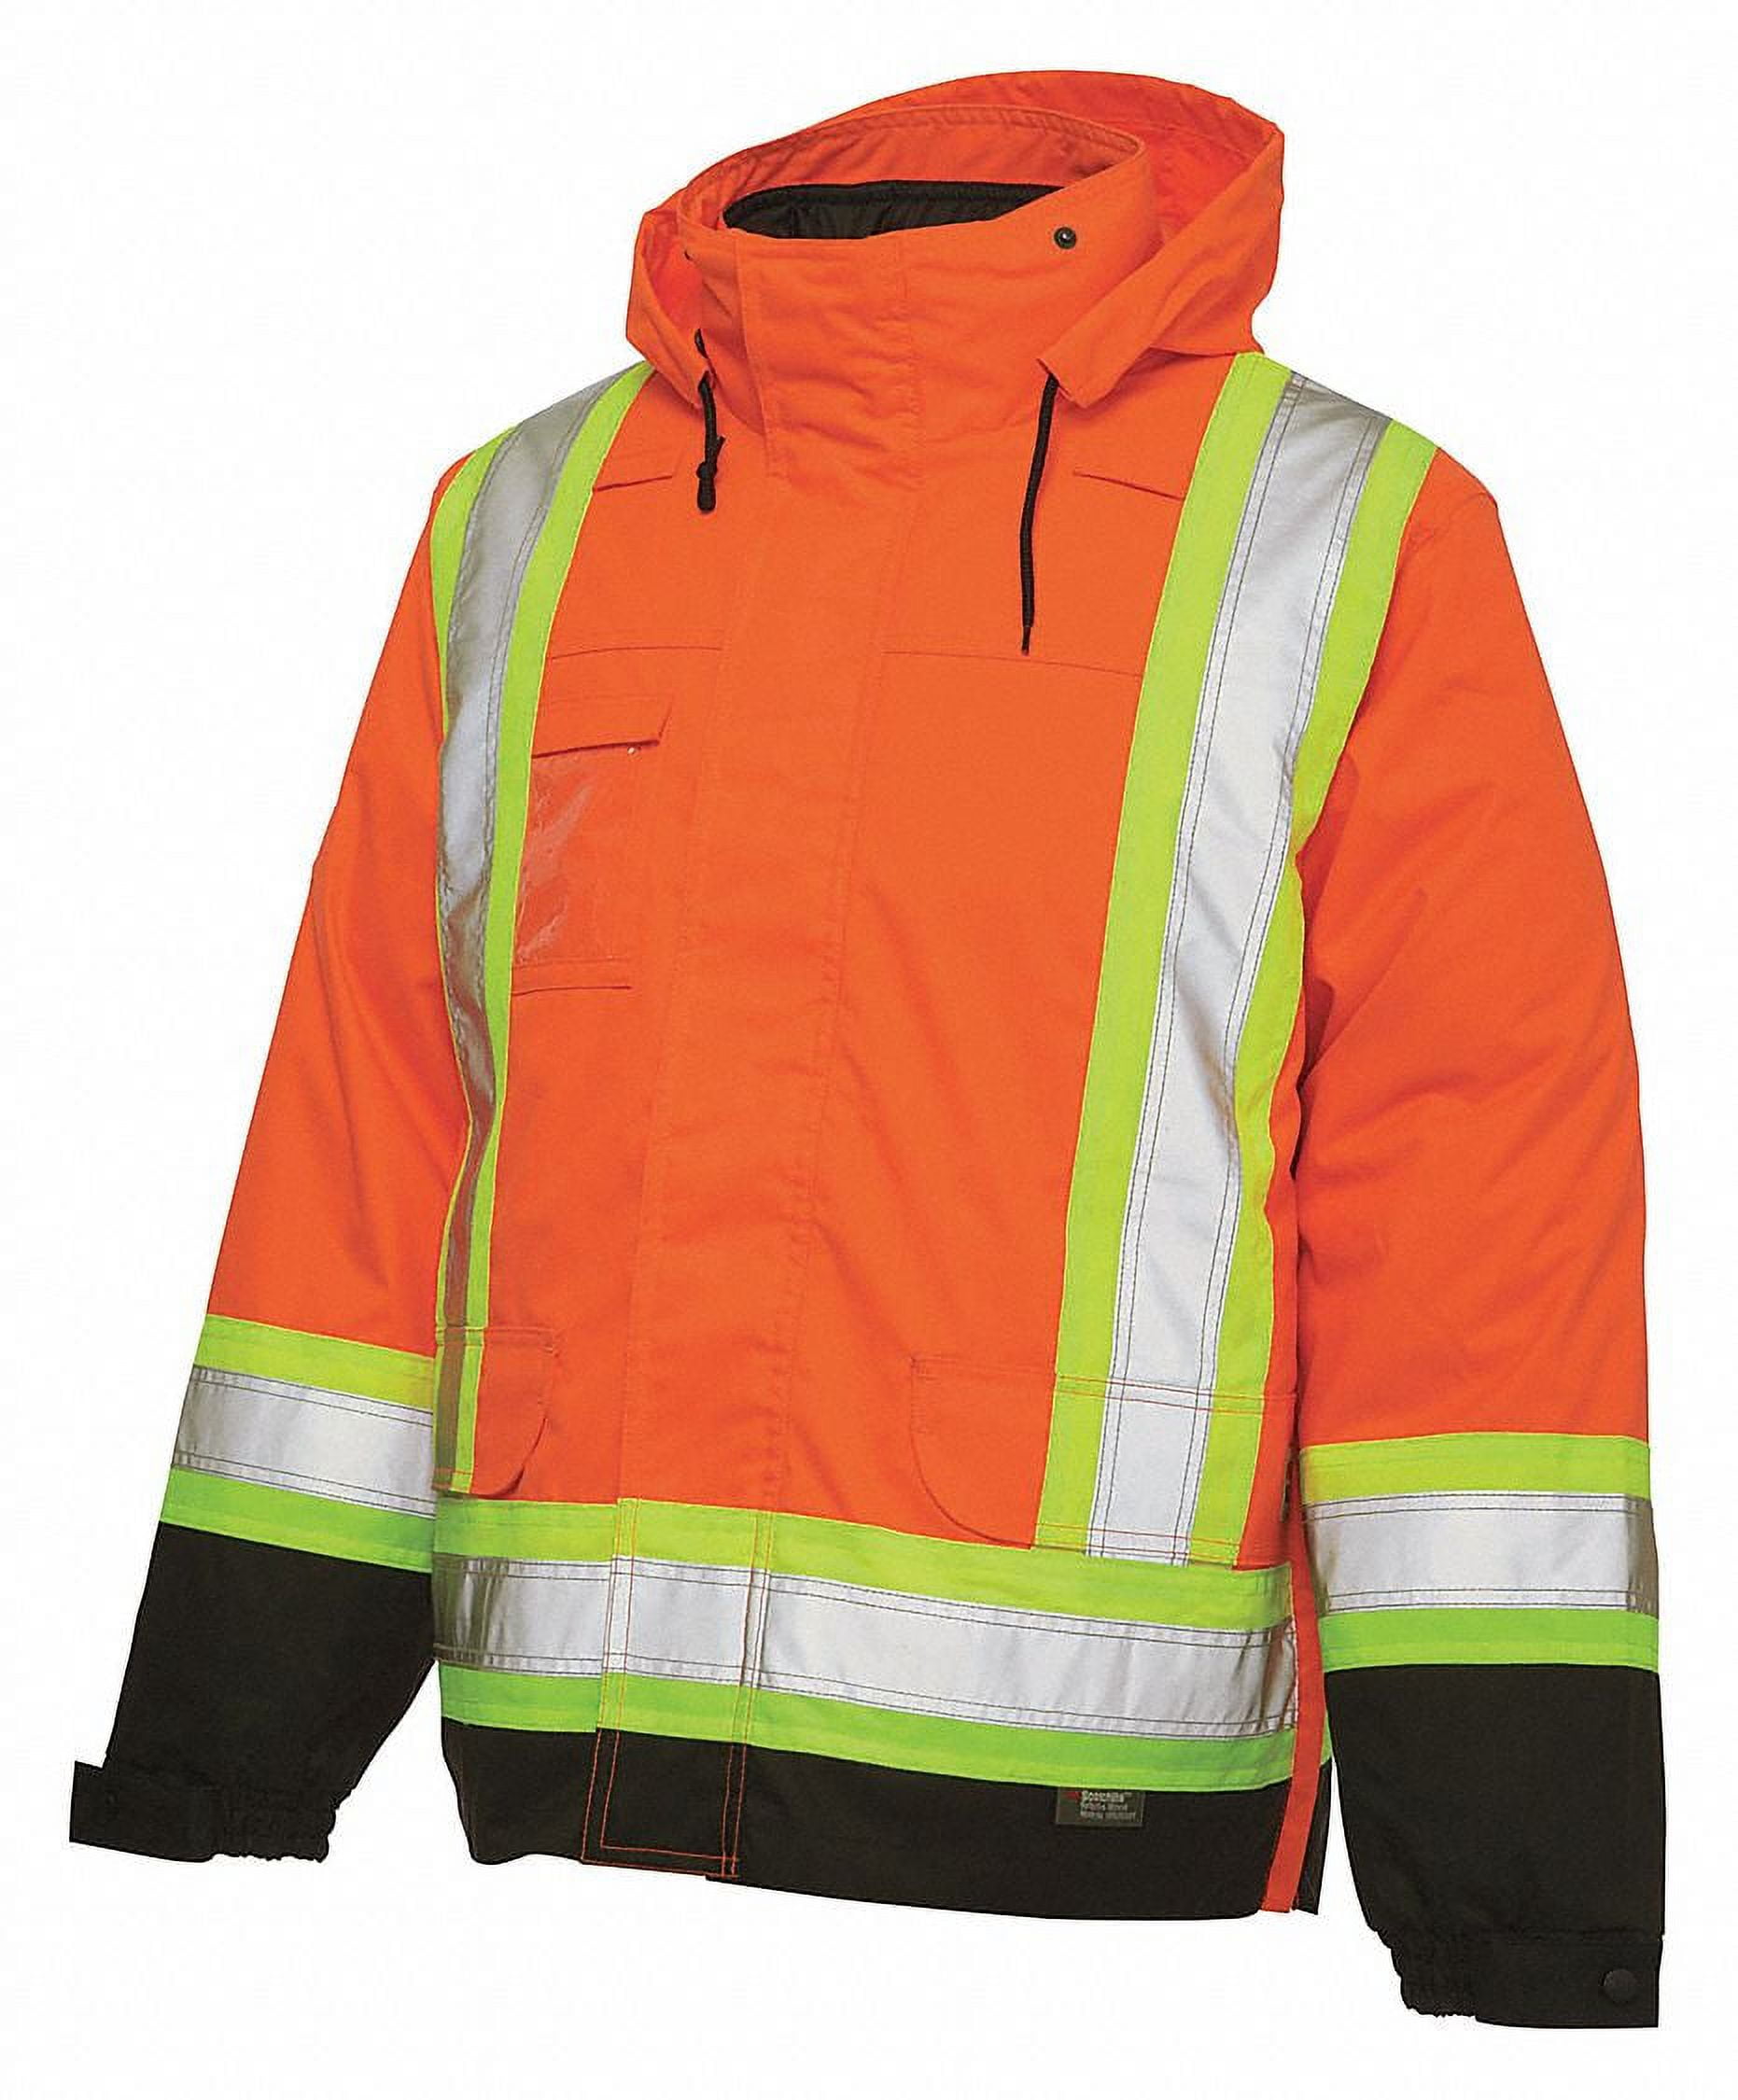 Work King 5-in-1 Hi-Vis Class Safety Jacket, Fleece Lined, All Seasons  Mens, Fluorescent Orange, XL